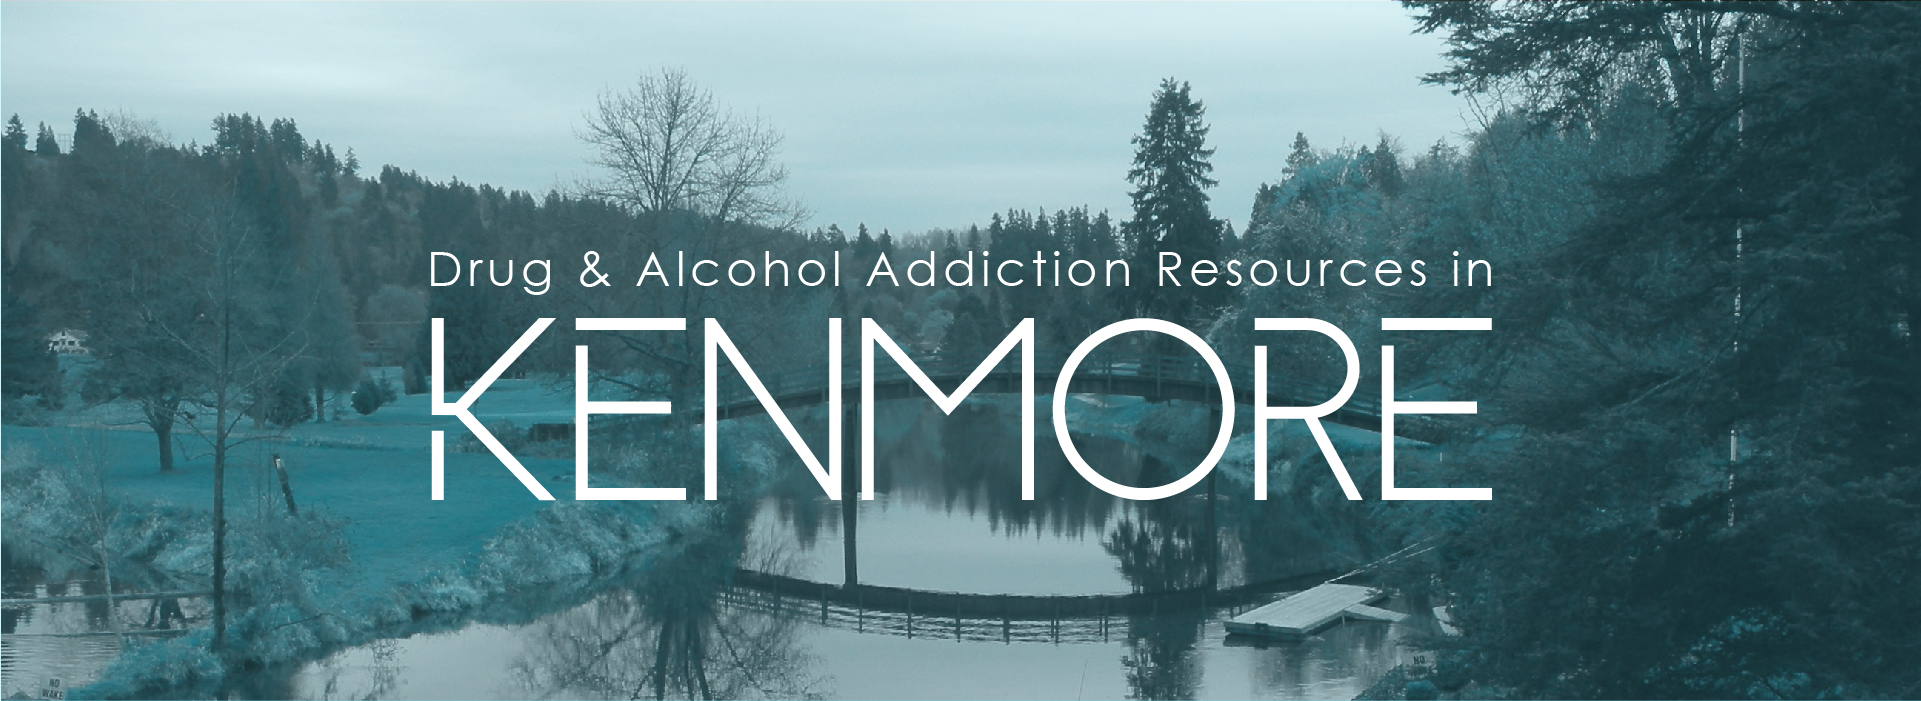 Kemore, Washington Addiction Resources